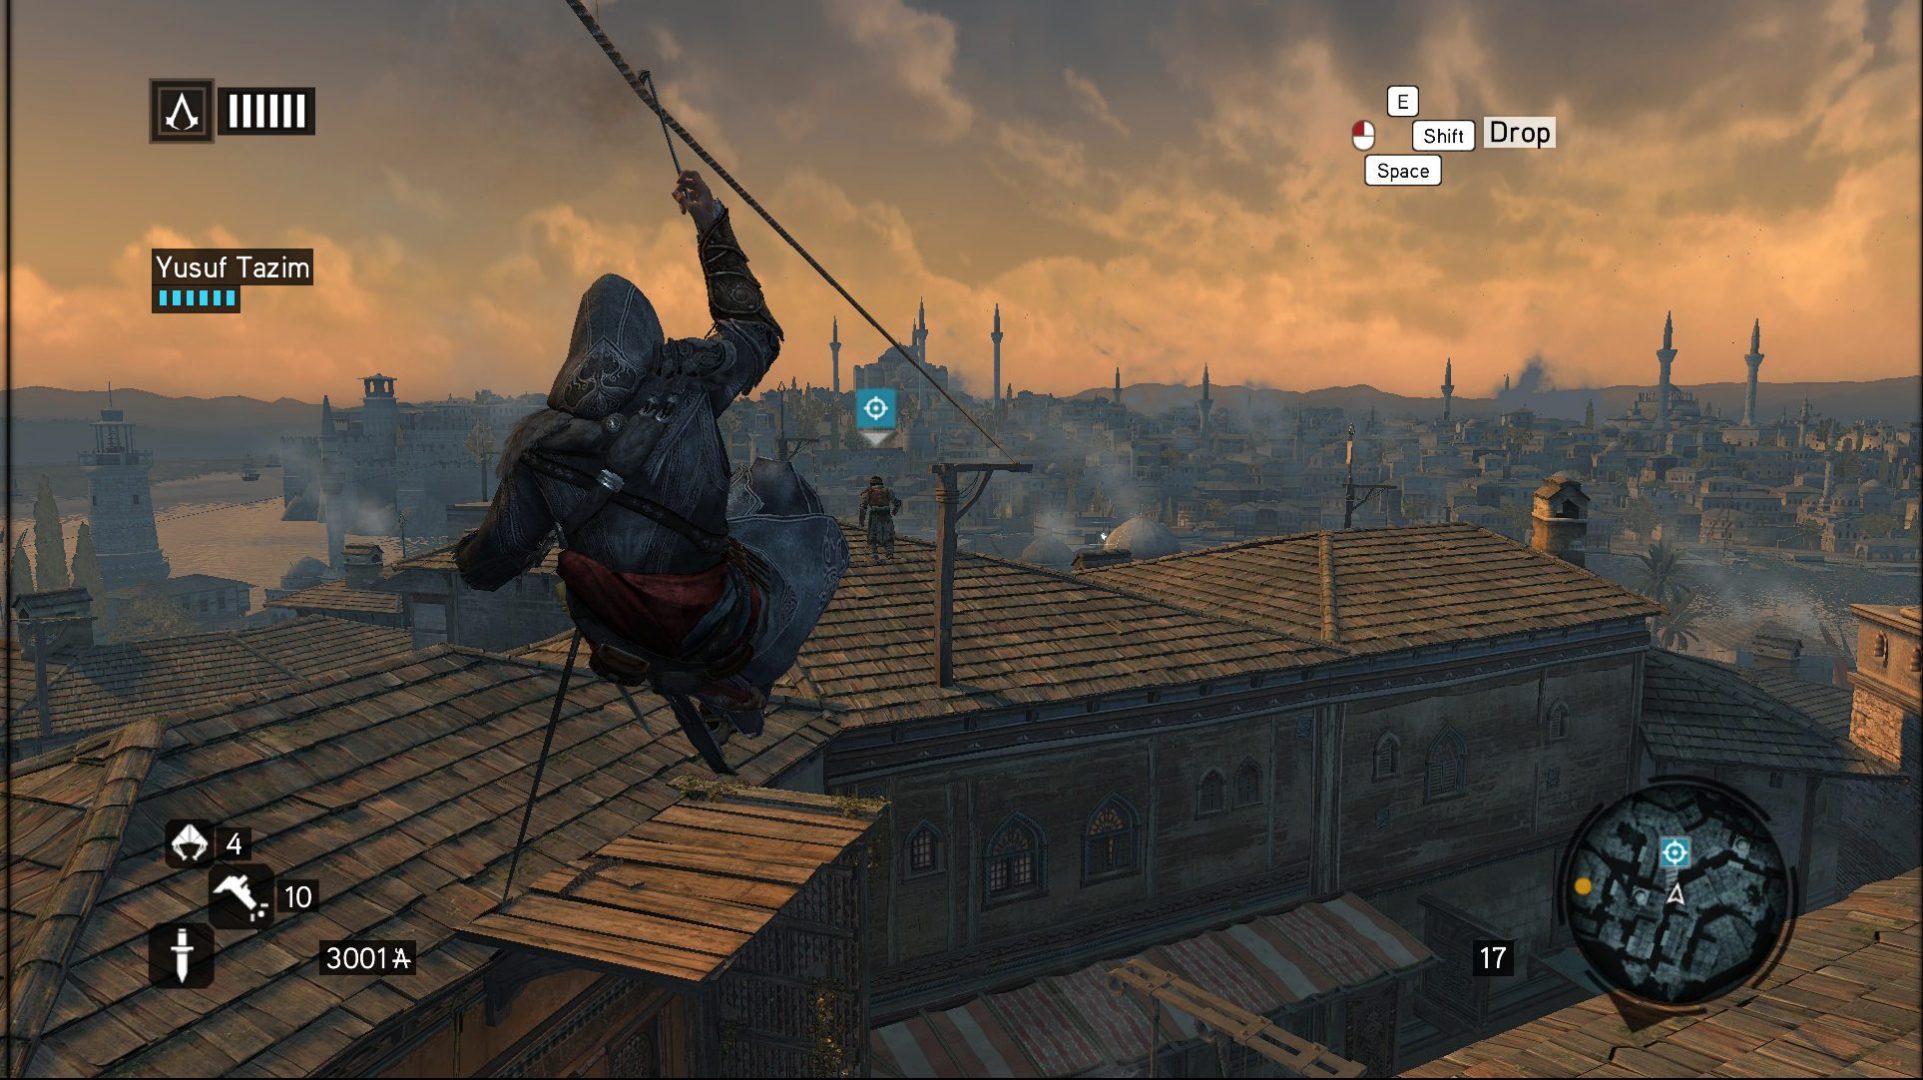 Assassins Creed Revelations 2011